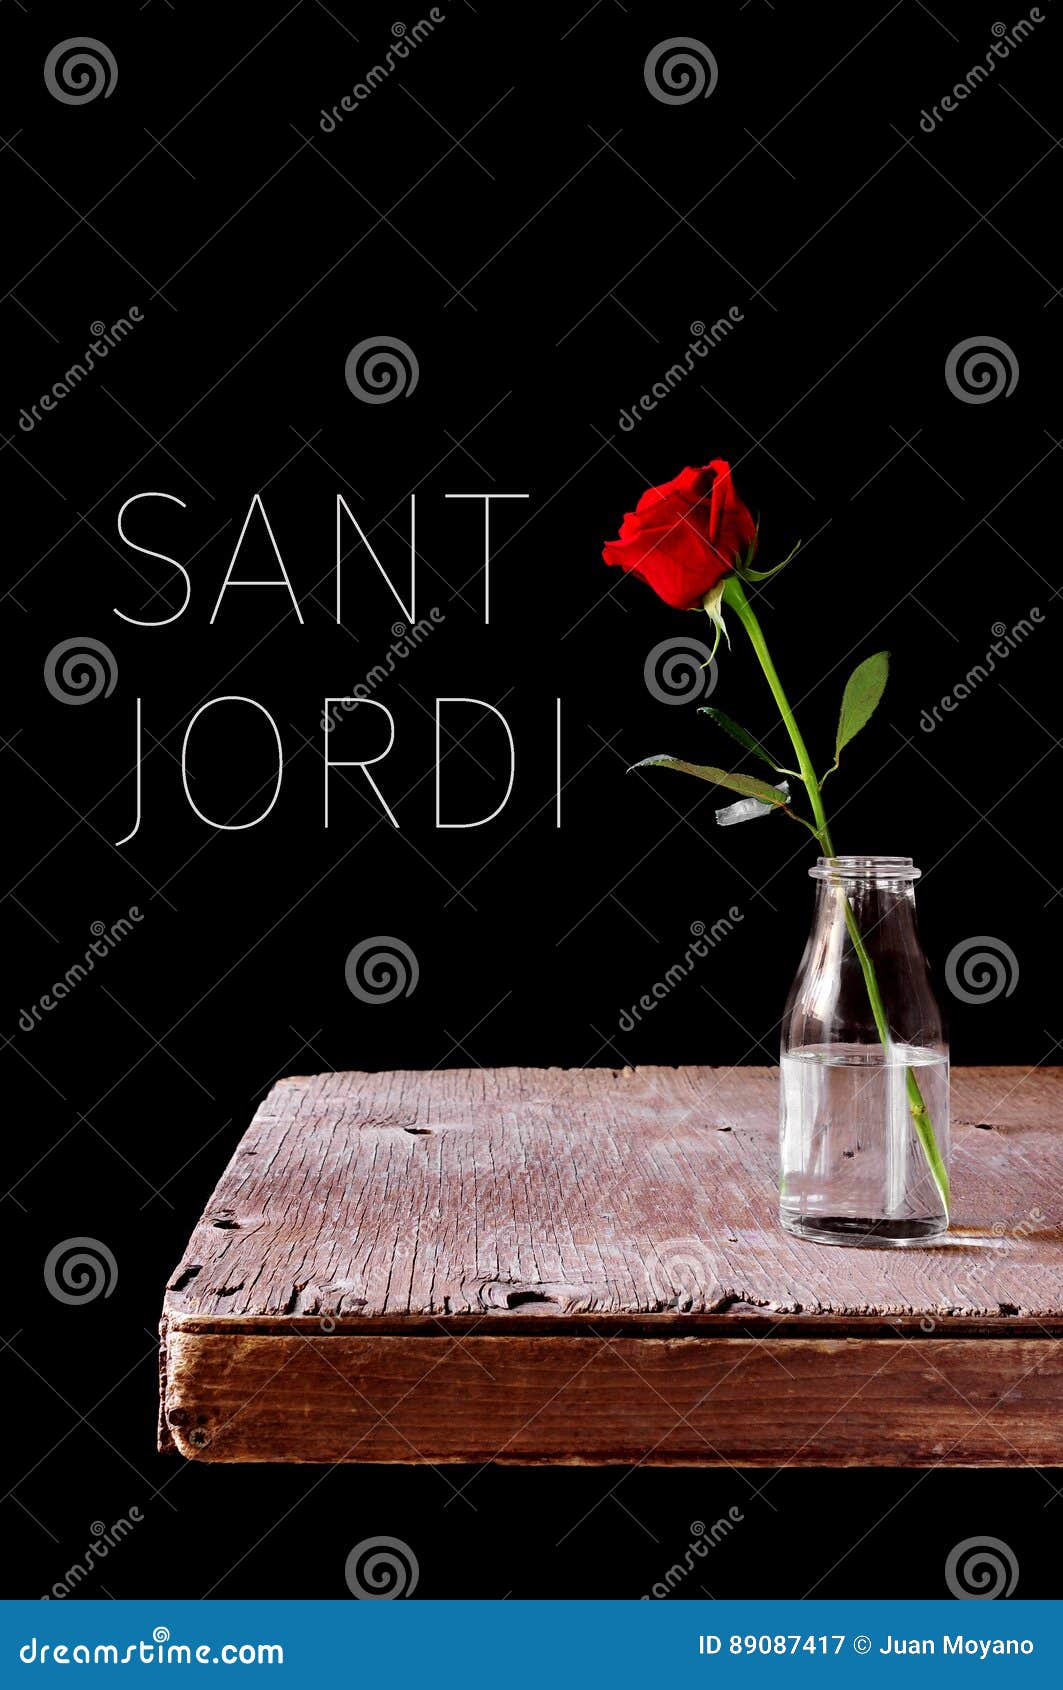 text sant jordi, catalan name for saint george day